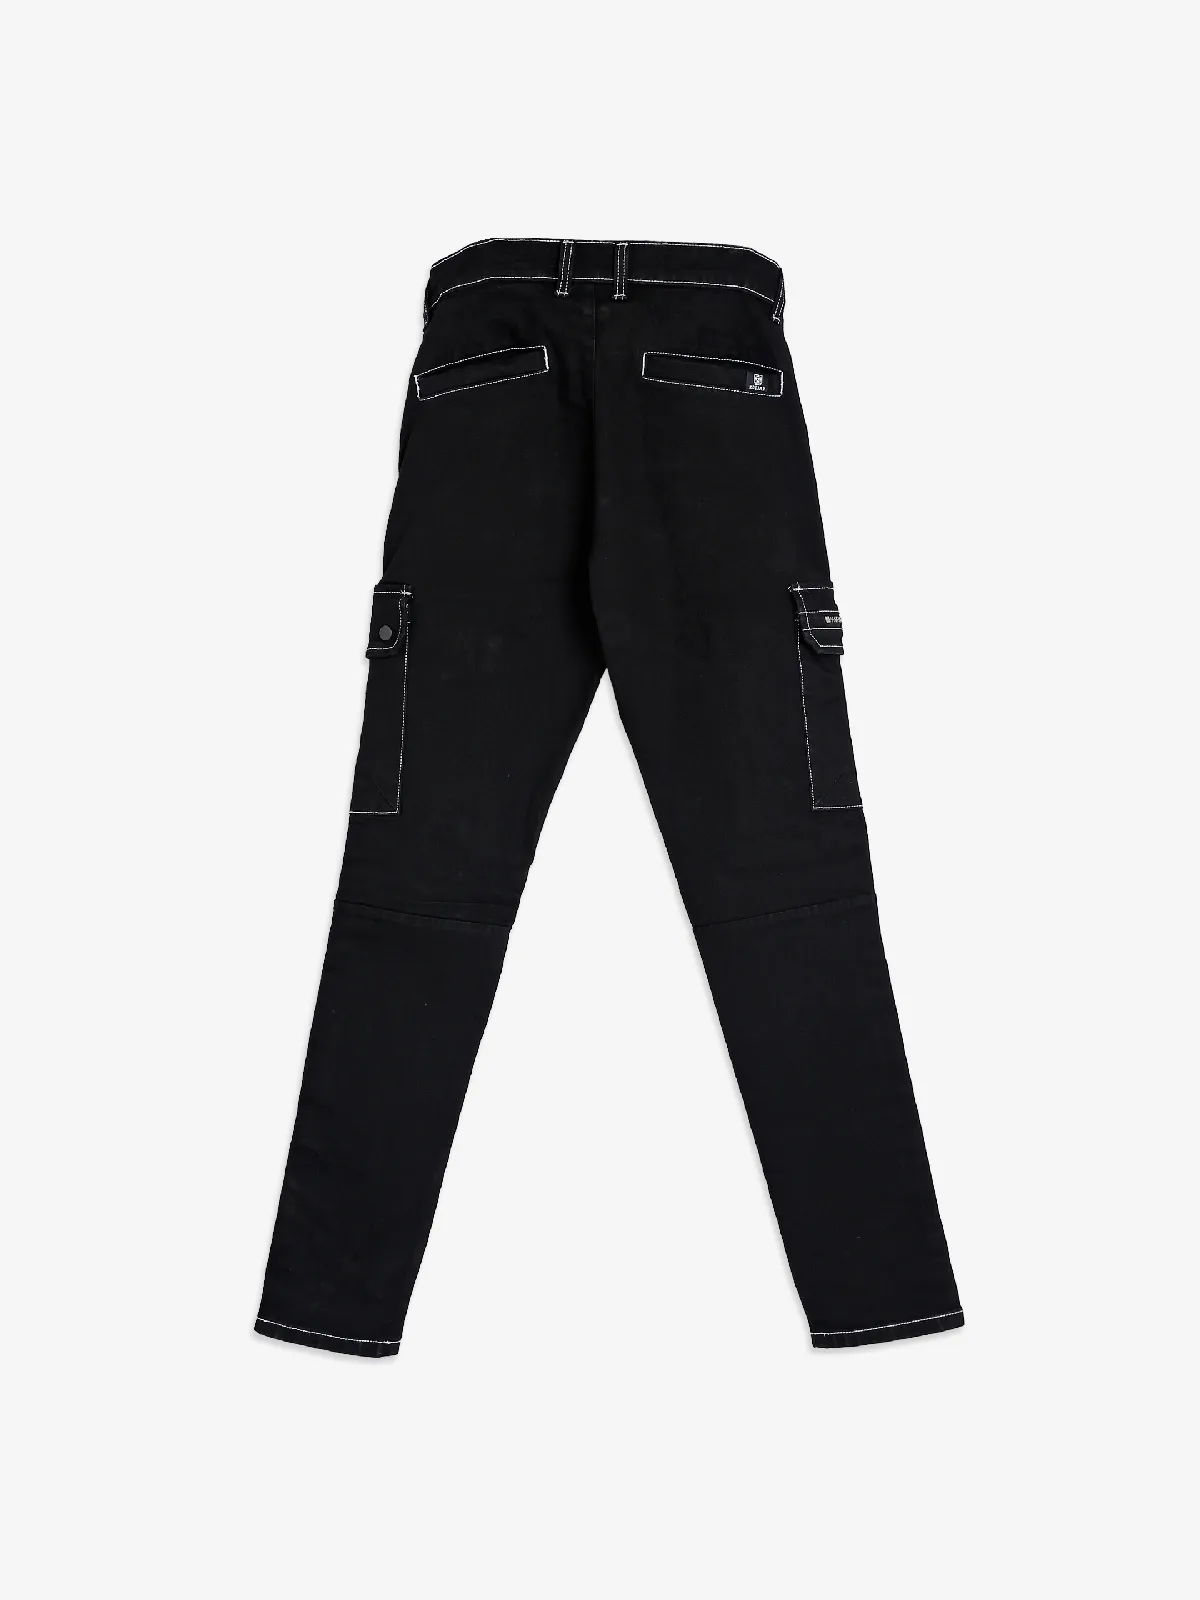 Kozzak black cargo jeans